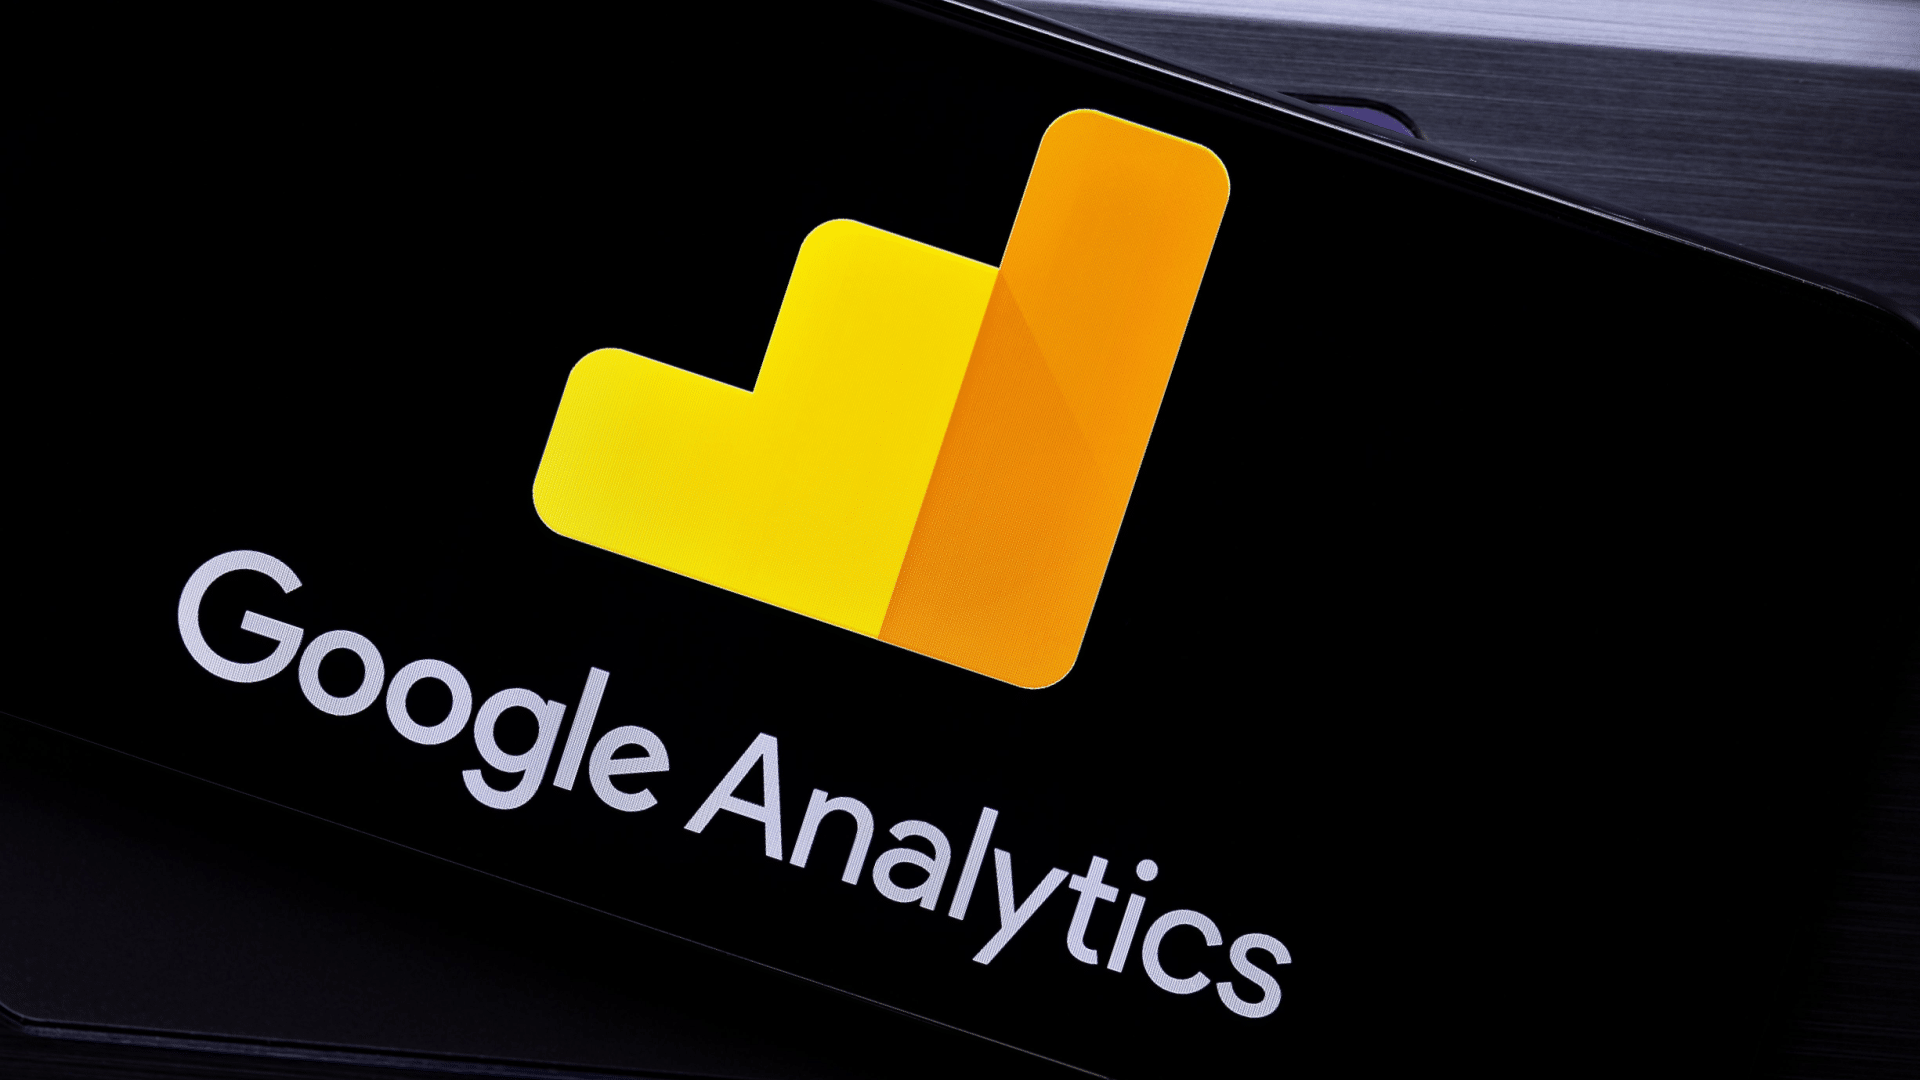 Google Analytics 4 audience builder gets a refresh